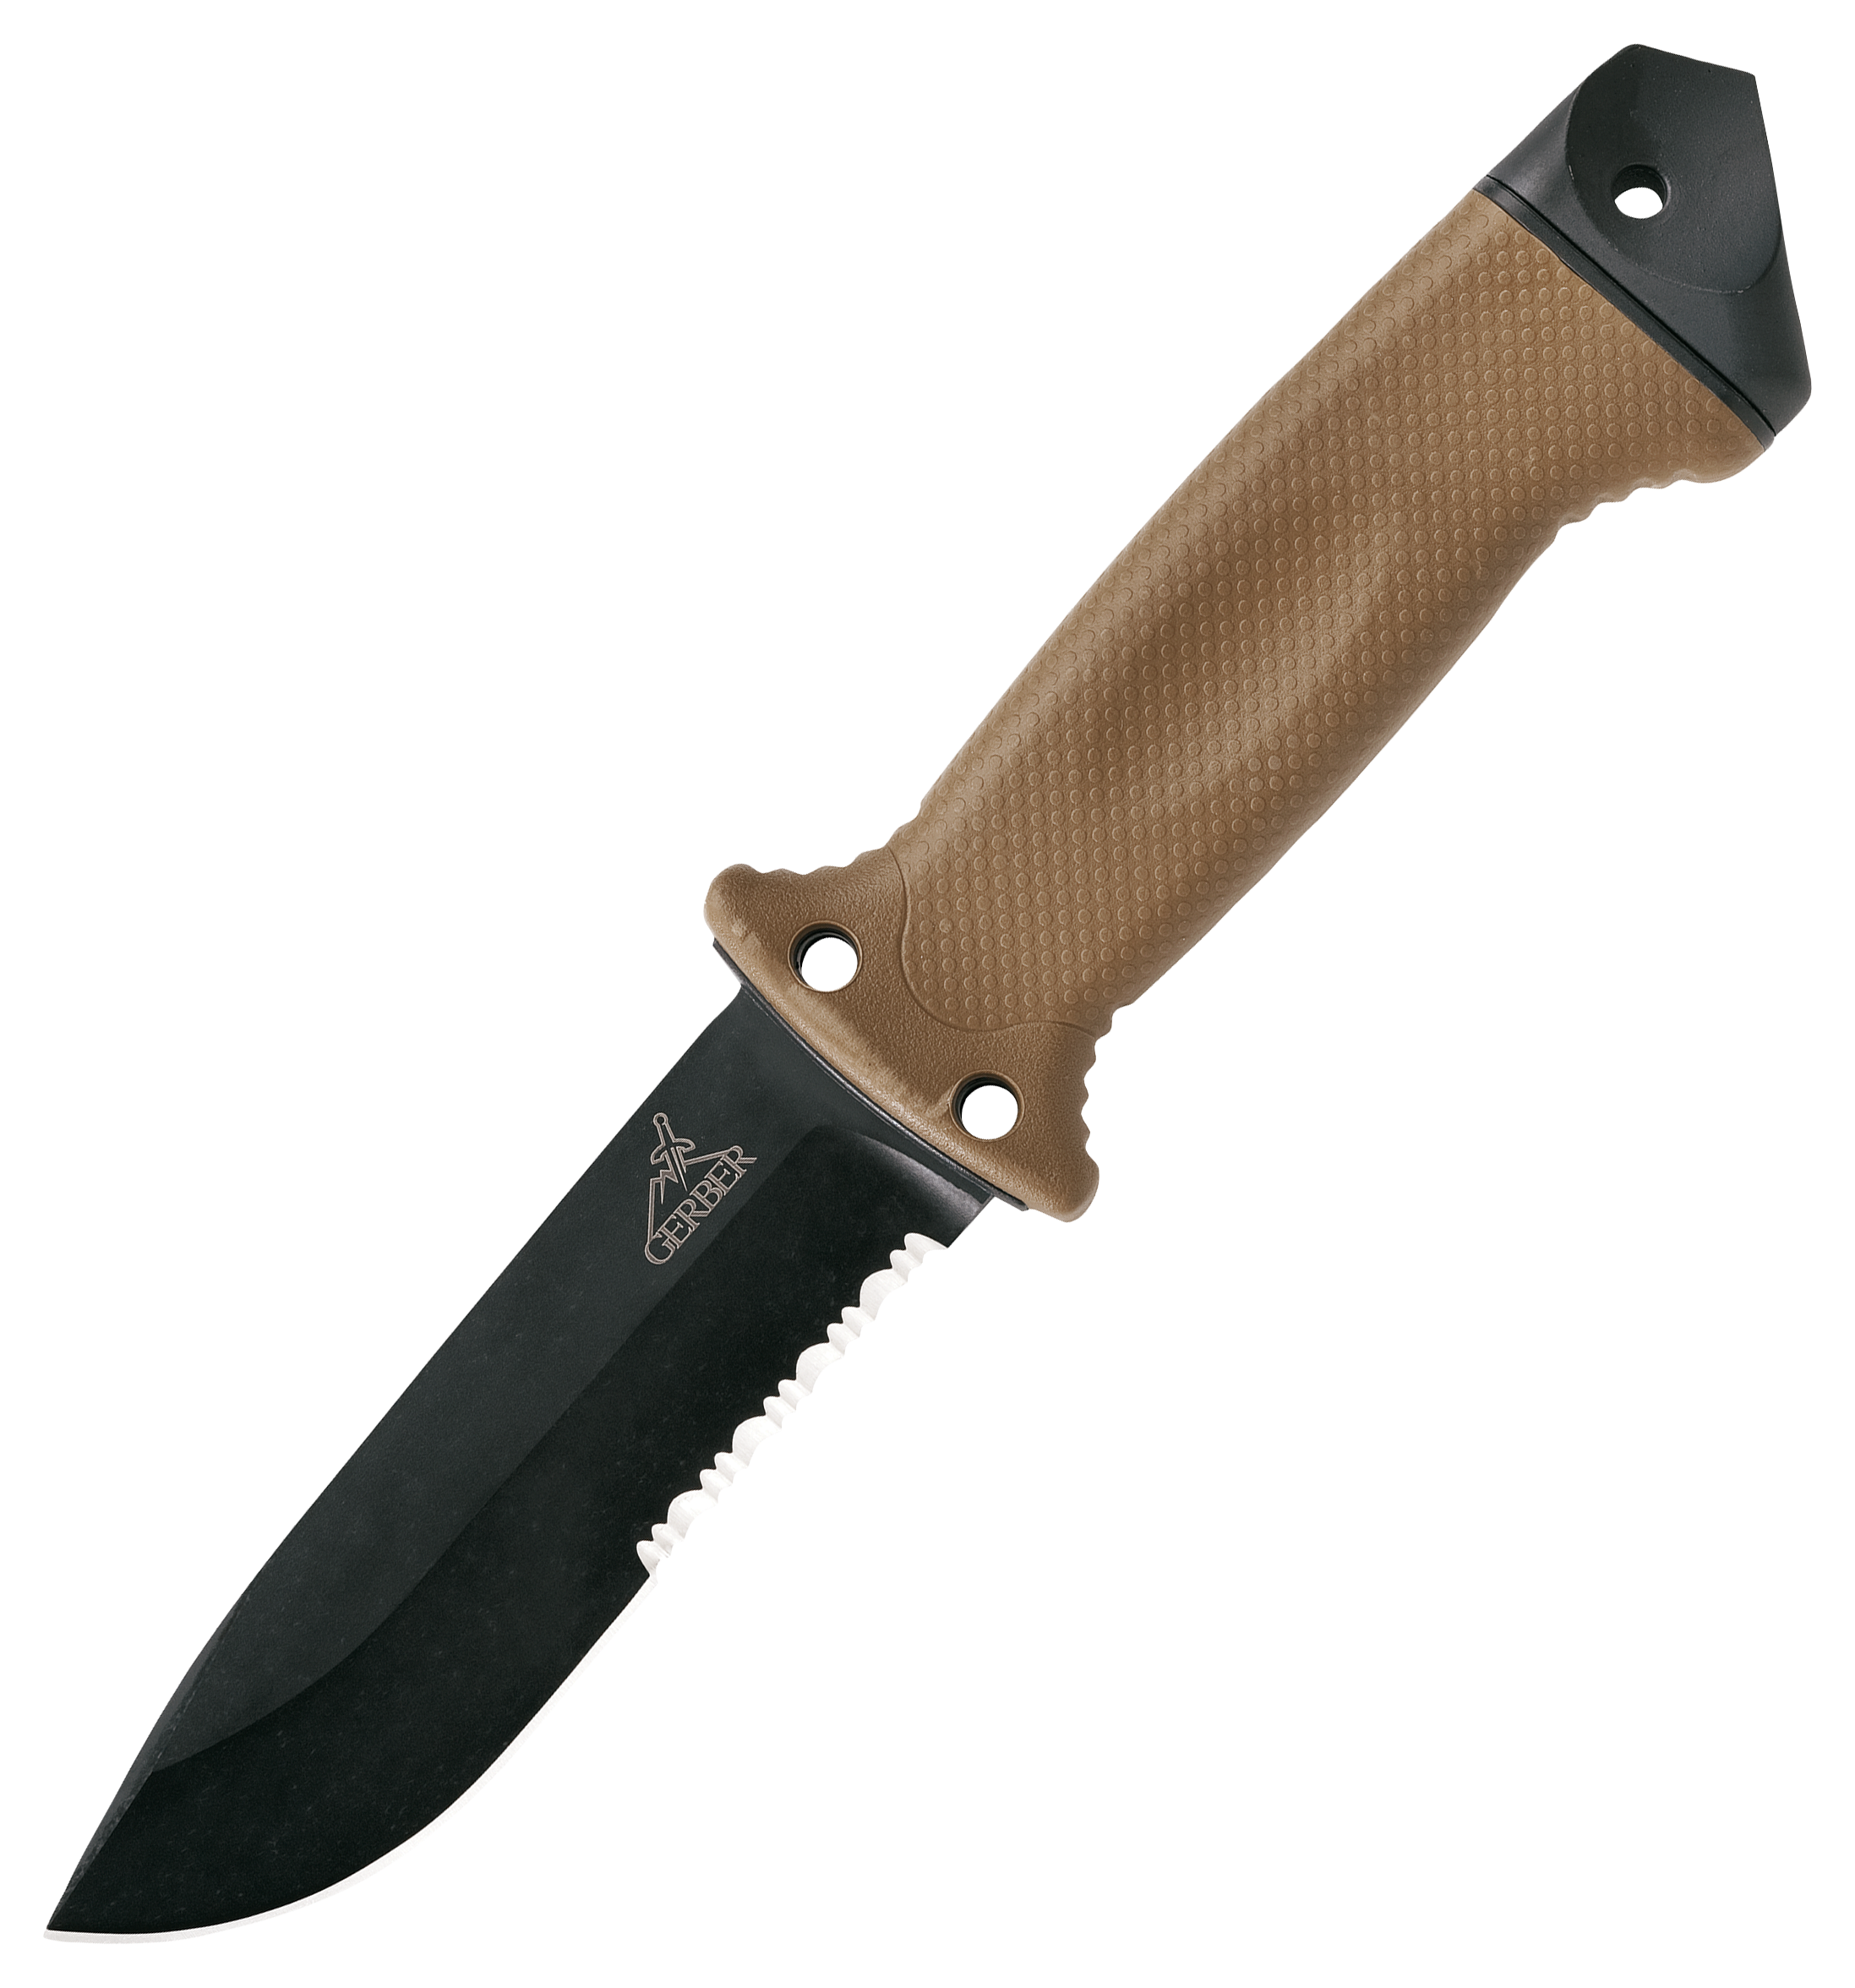 Gerber LMF II Infantry Fixed Blade Knife - Coyote/Black